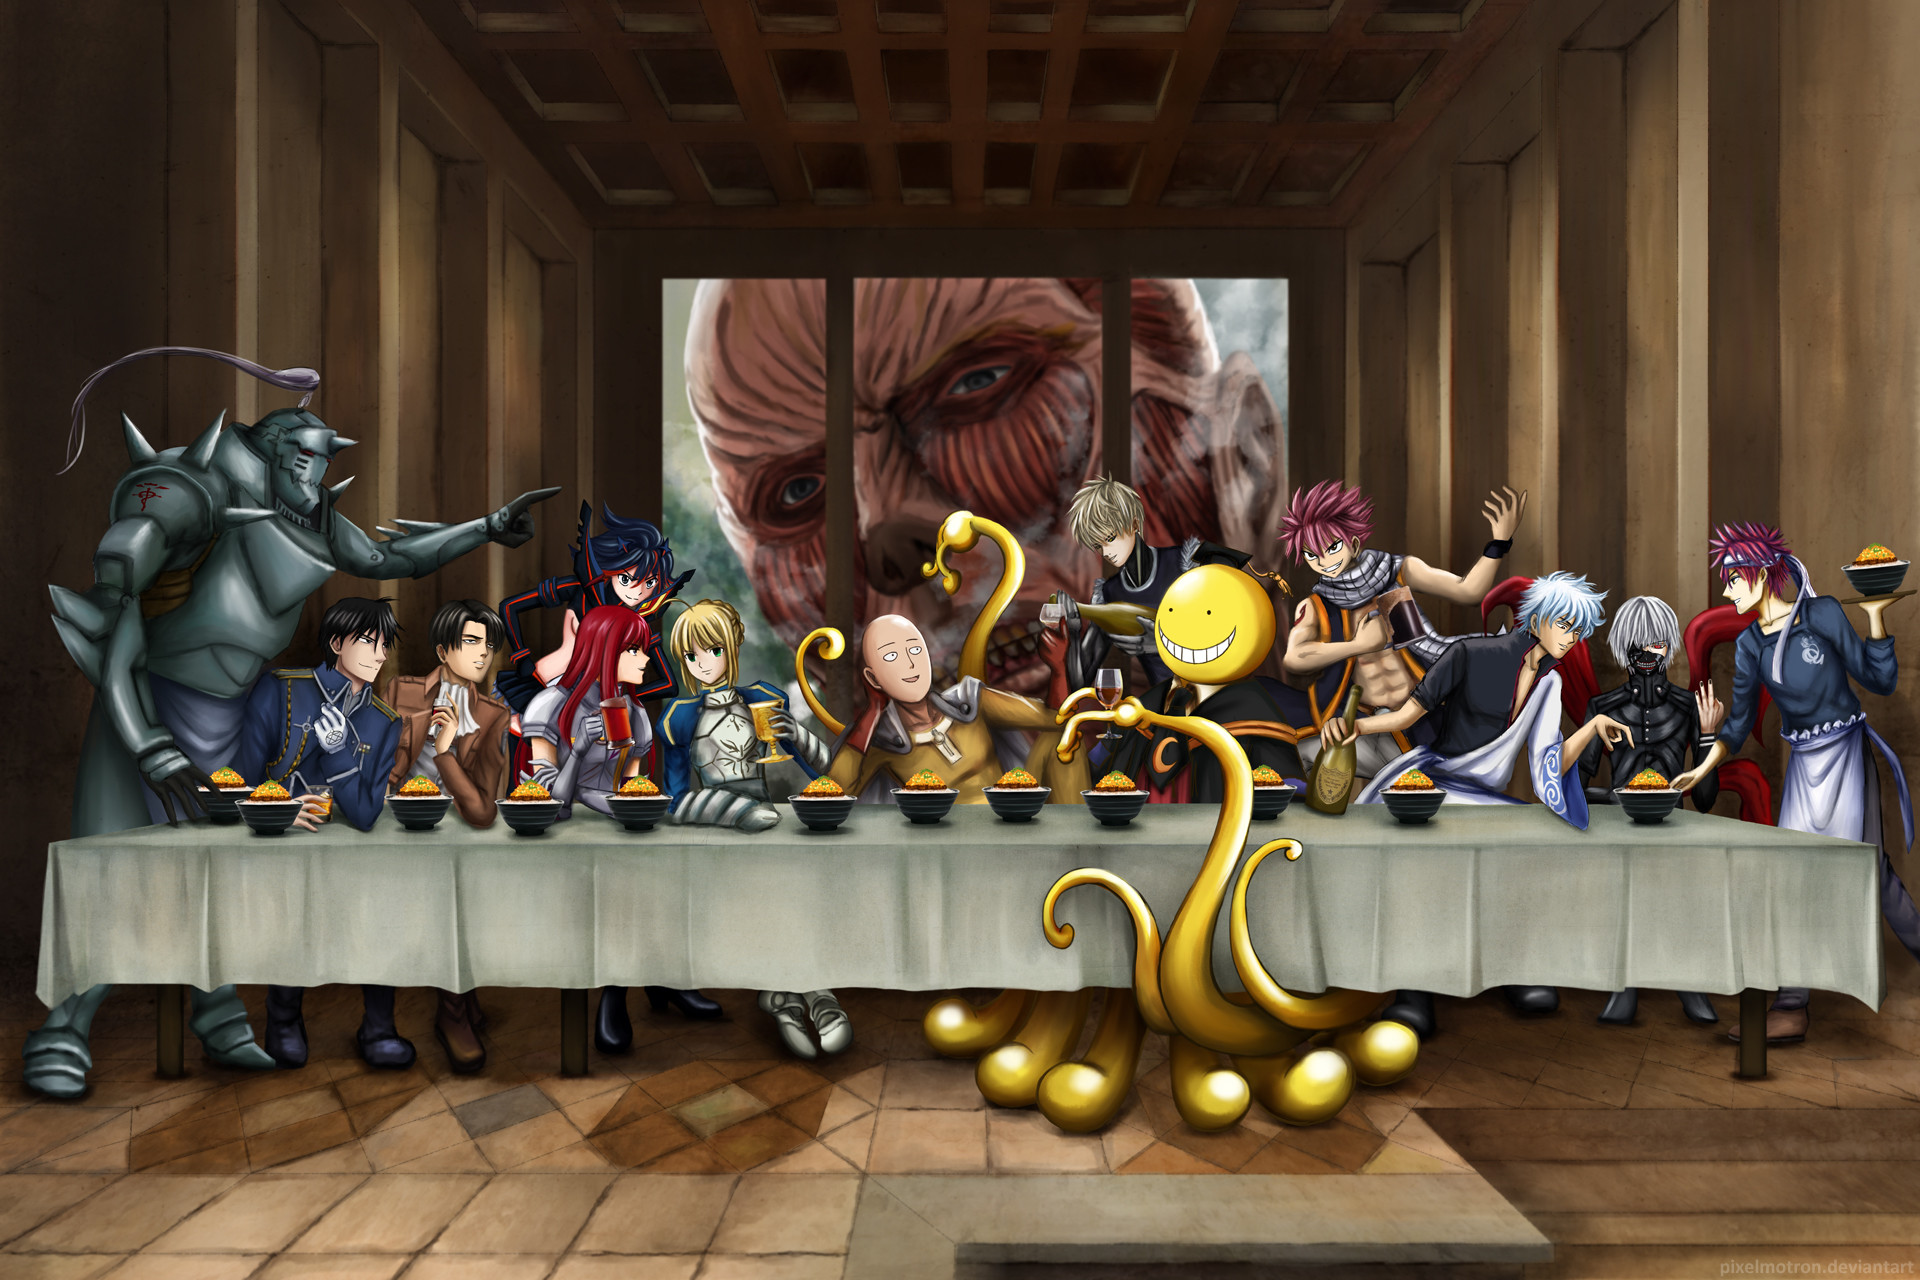 ArtStation - The Last Supper - Anime crossover version